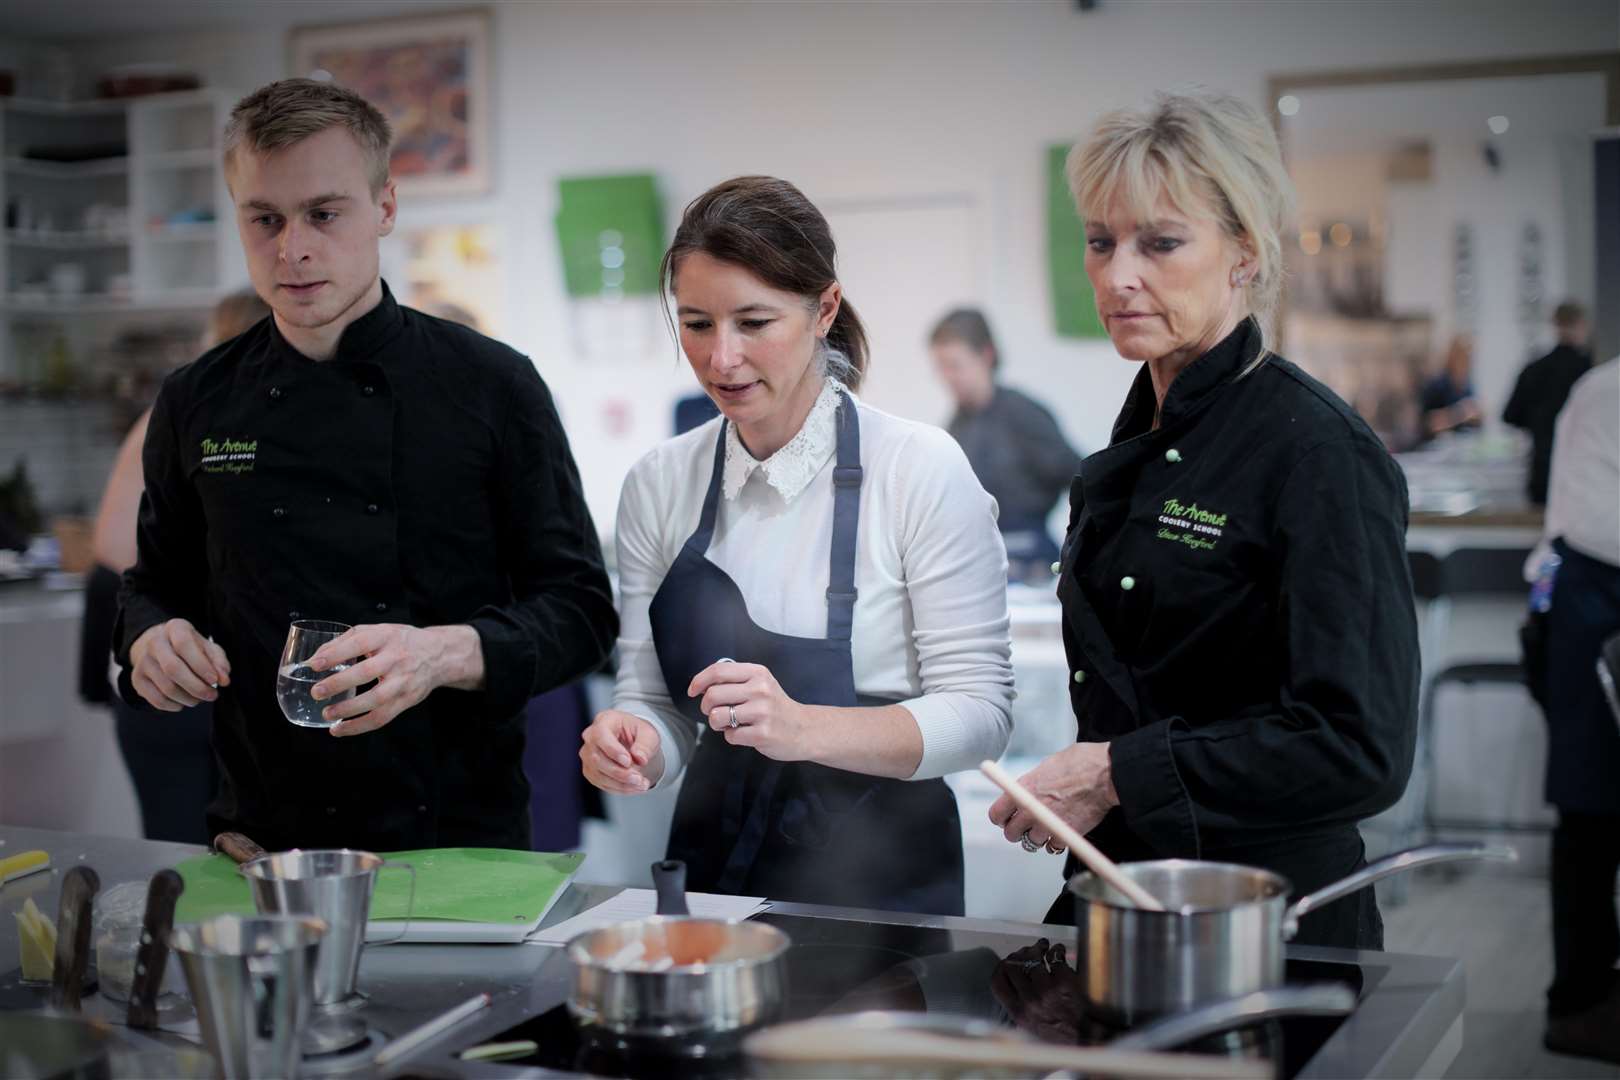 Chefs Richard and Diana Horsford keep an eye on proceedings